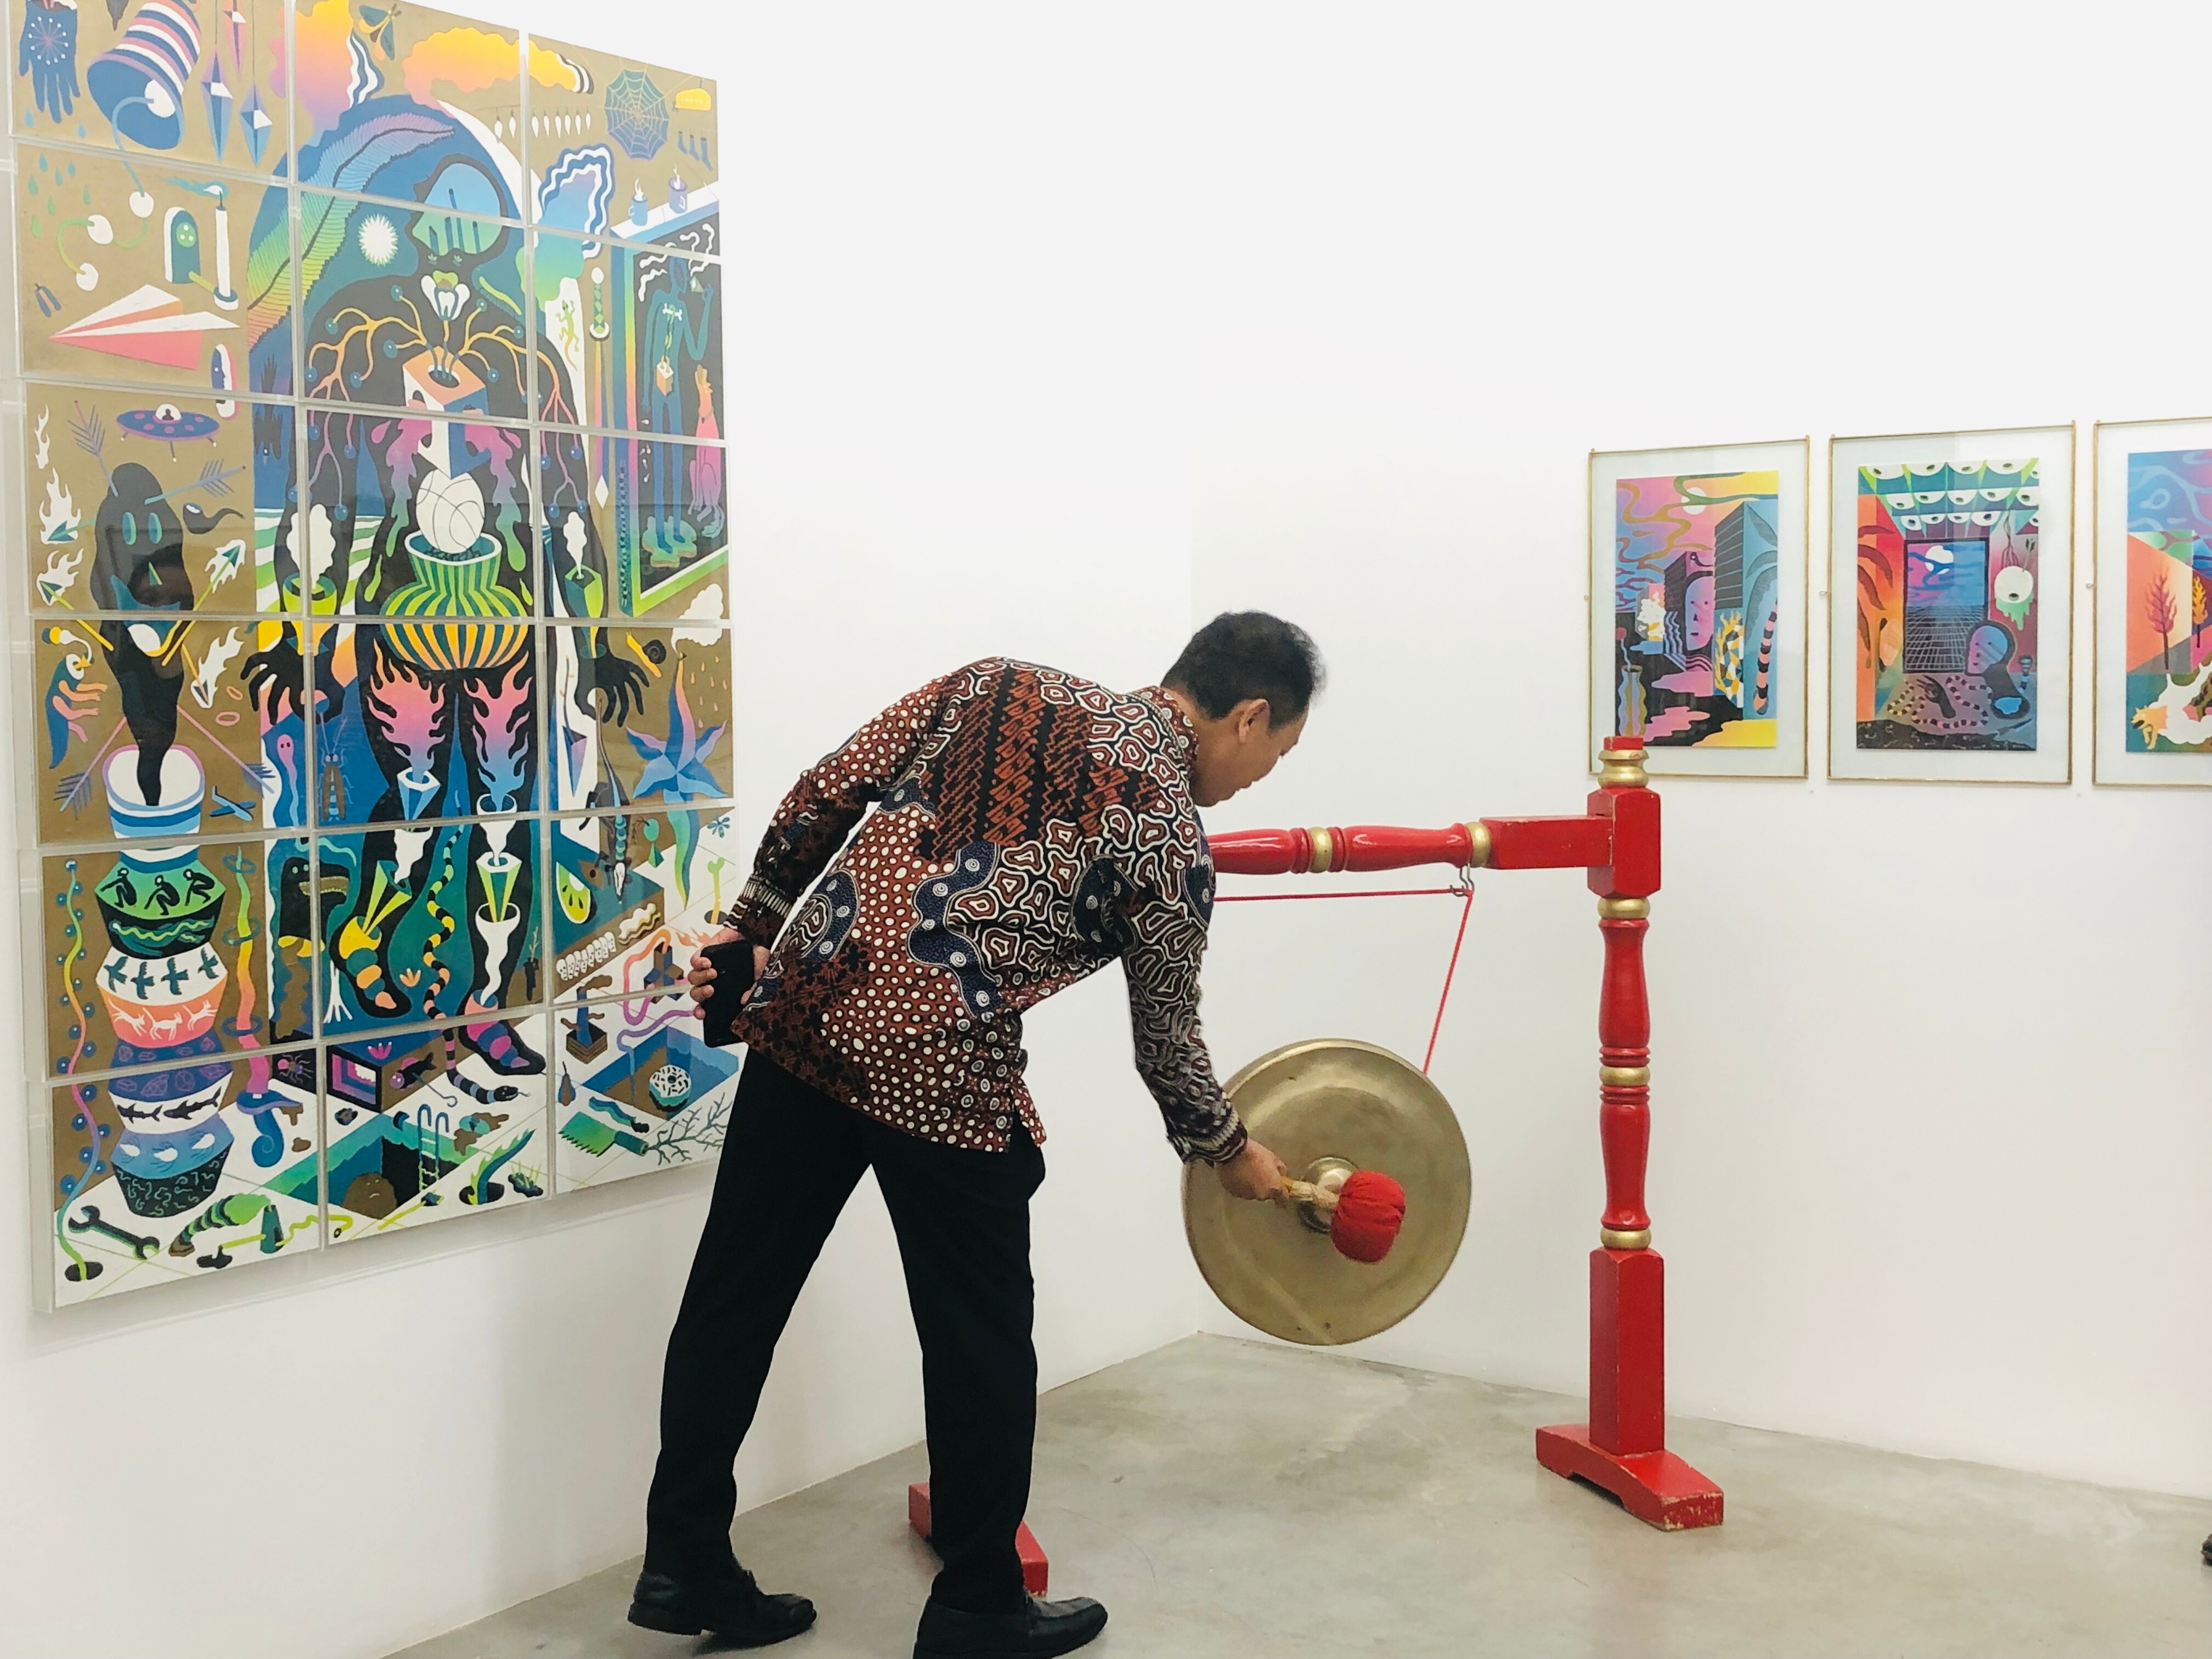 Indonesian Consul General Mr Heru Hartanto Subolo hits the gong as he opens 'Termasuk' art exhibition. 